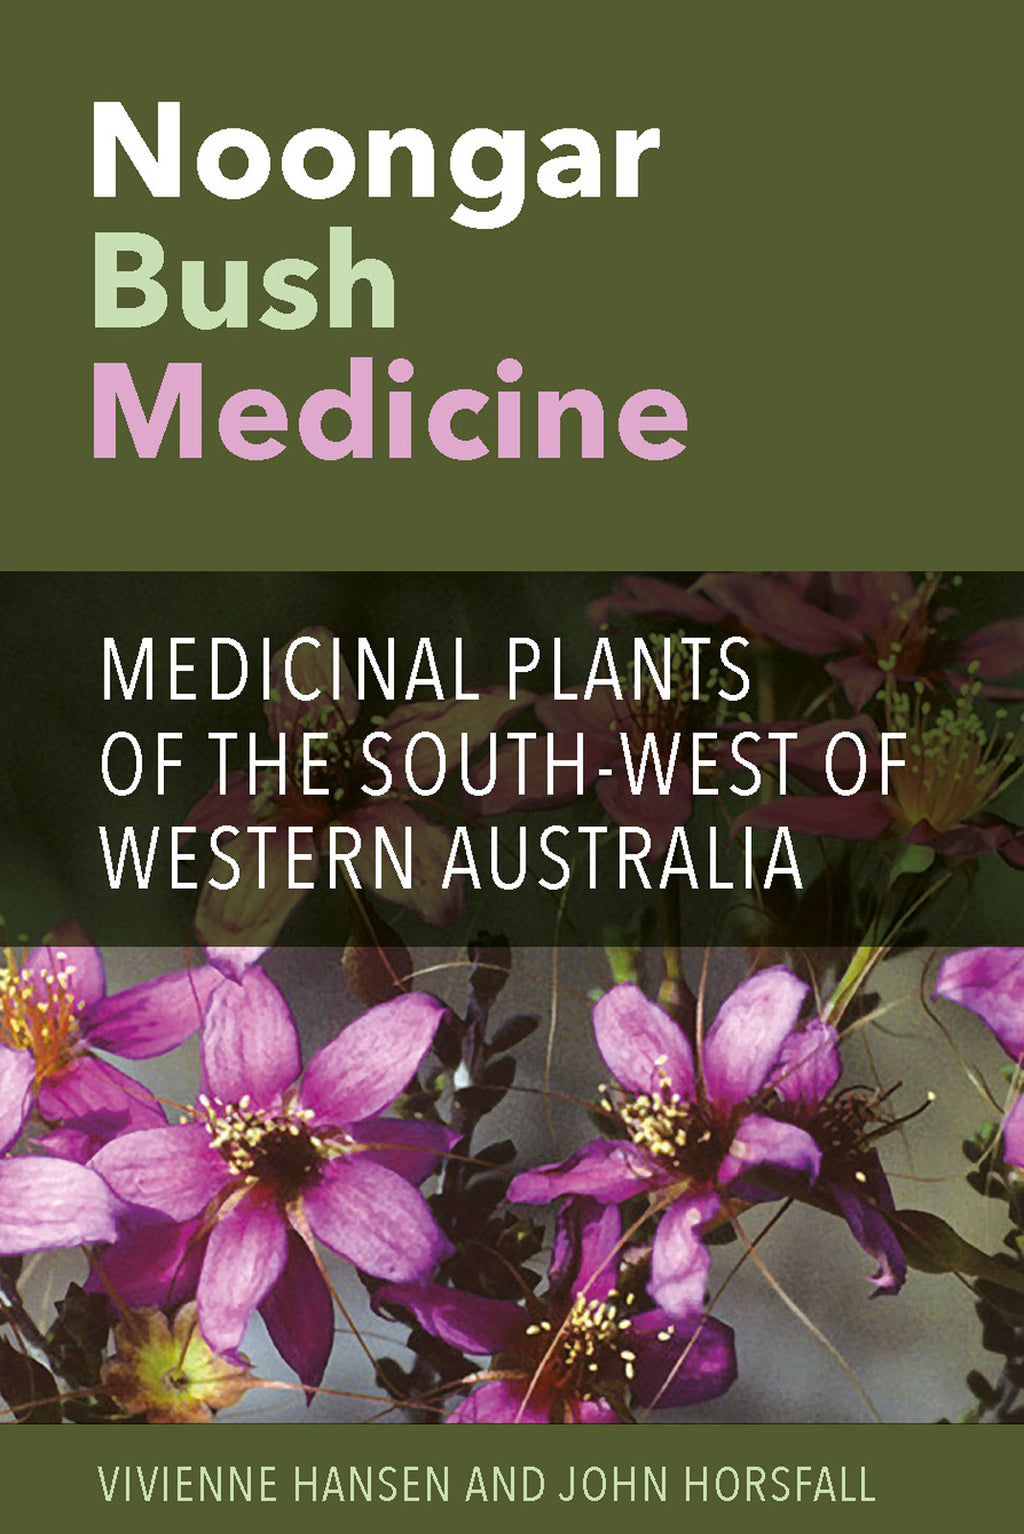 Noongar Bush Medicine - Medicinal Plants of the South-west of Western Australia